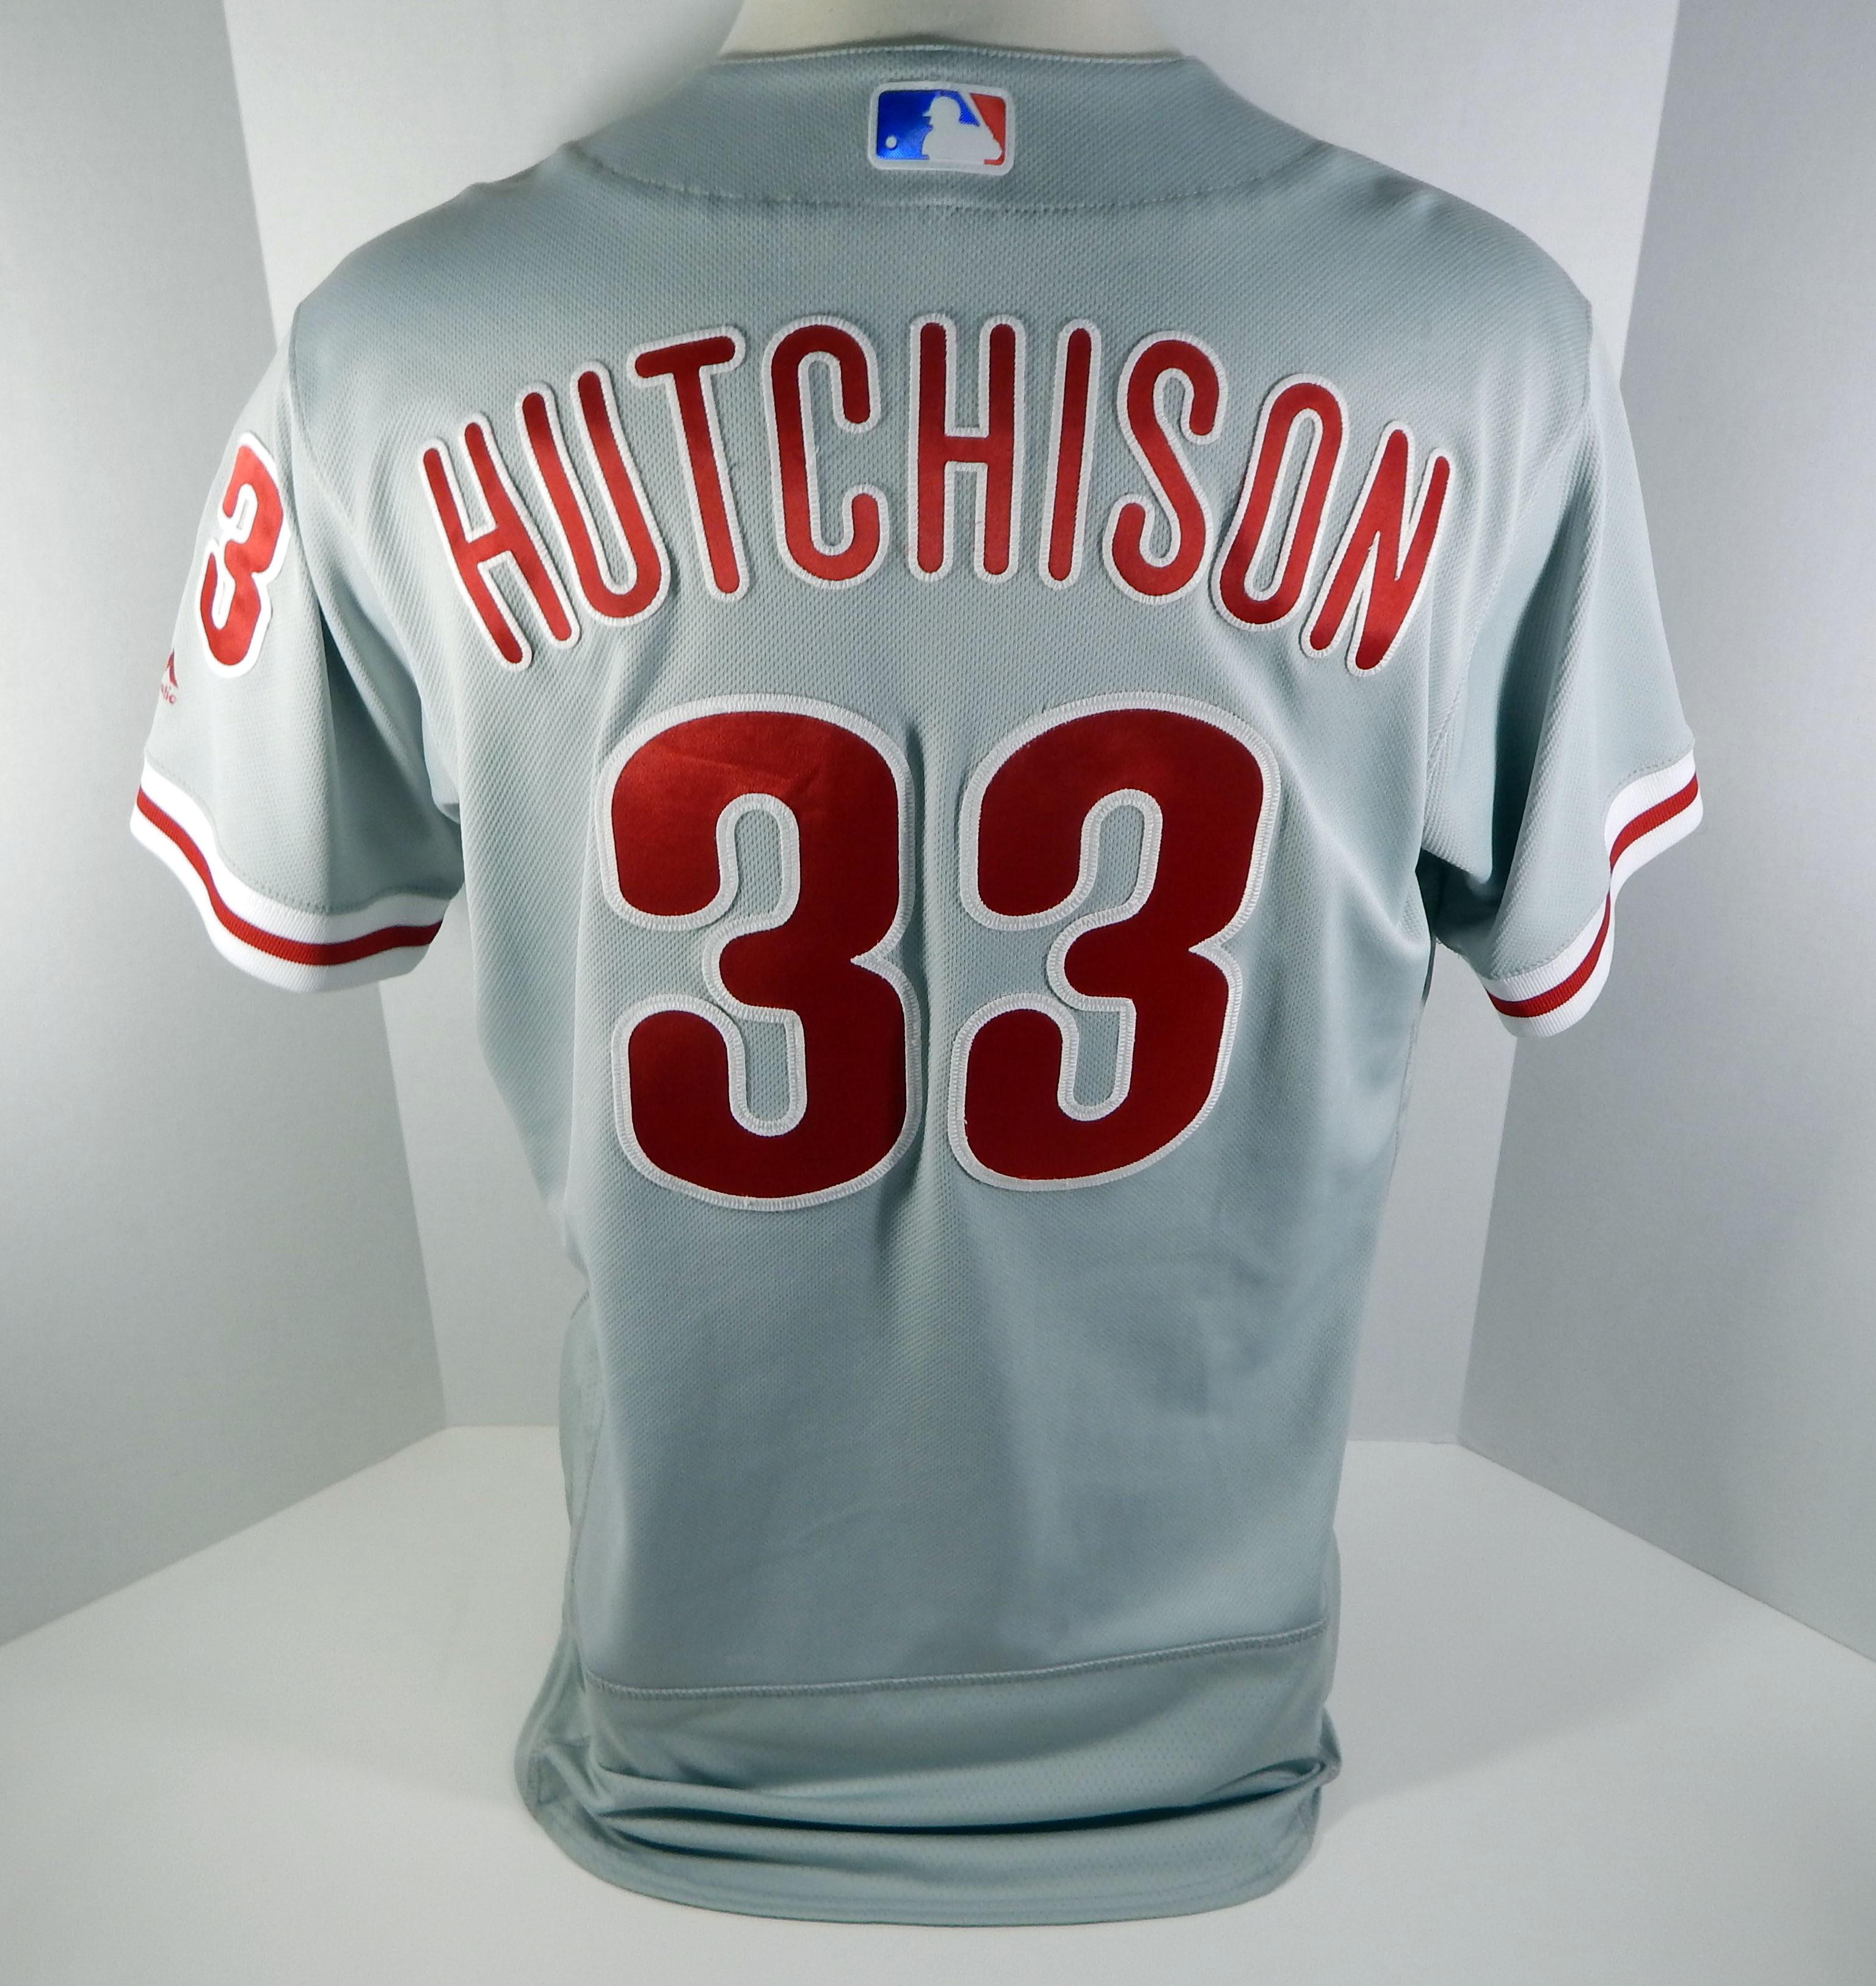 2018 Philadelphia Phillies Drew Hutchison #33 Game Used Grey Jersey | eBay